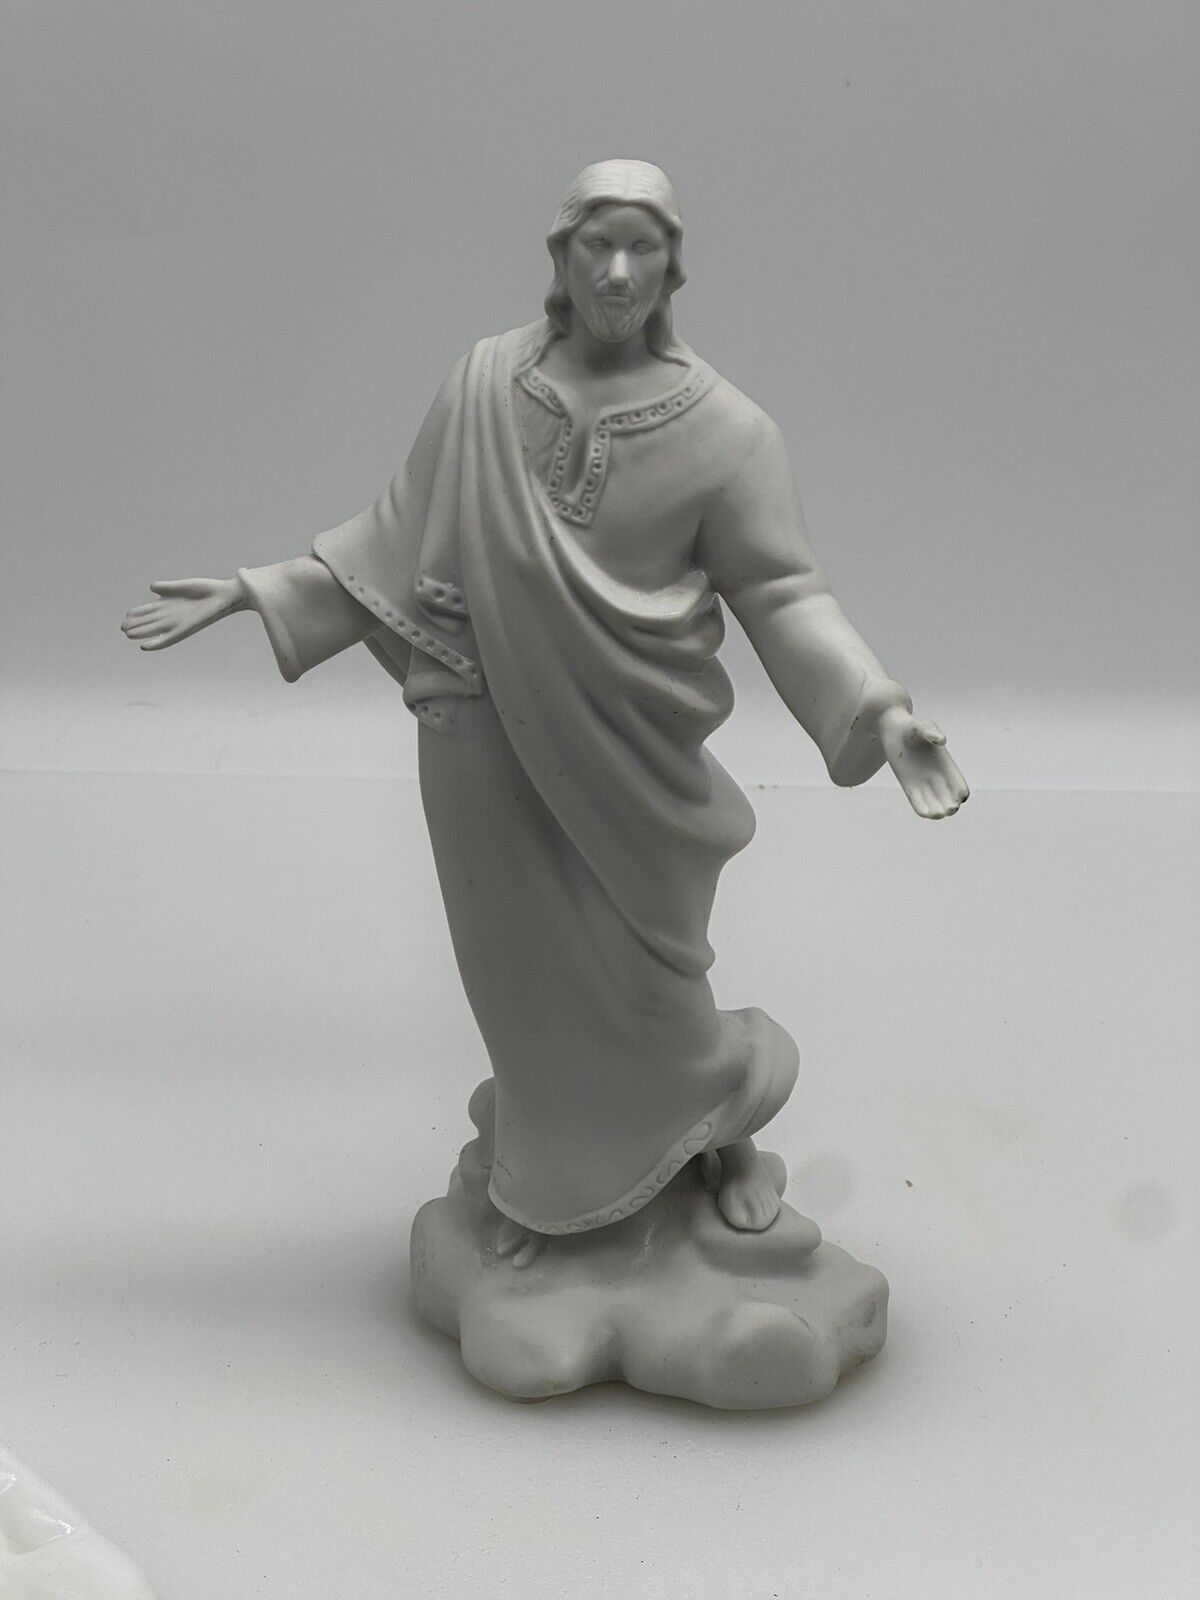 Teleflora Porcelain Statue of Lord Jesus Christ Sculpture by Stuart Mark Feldman